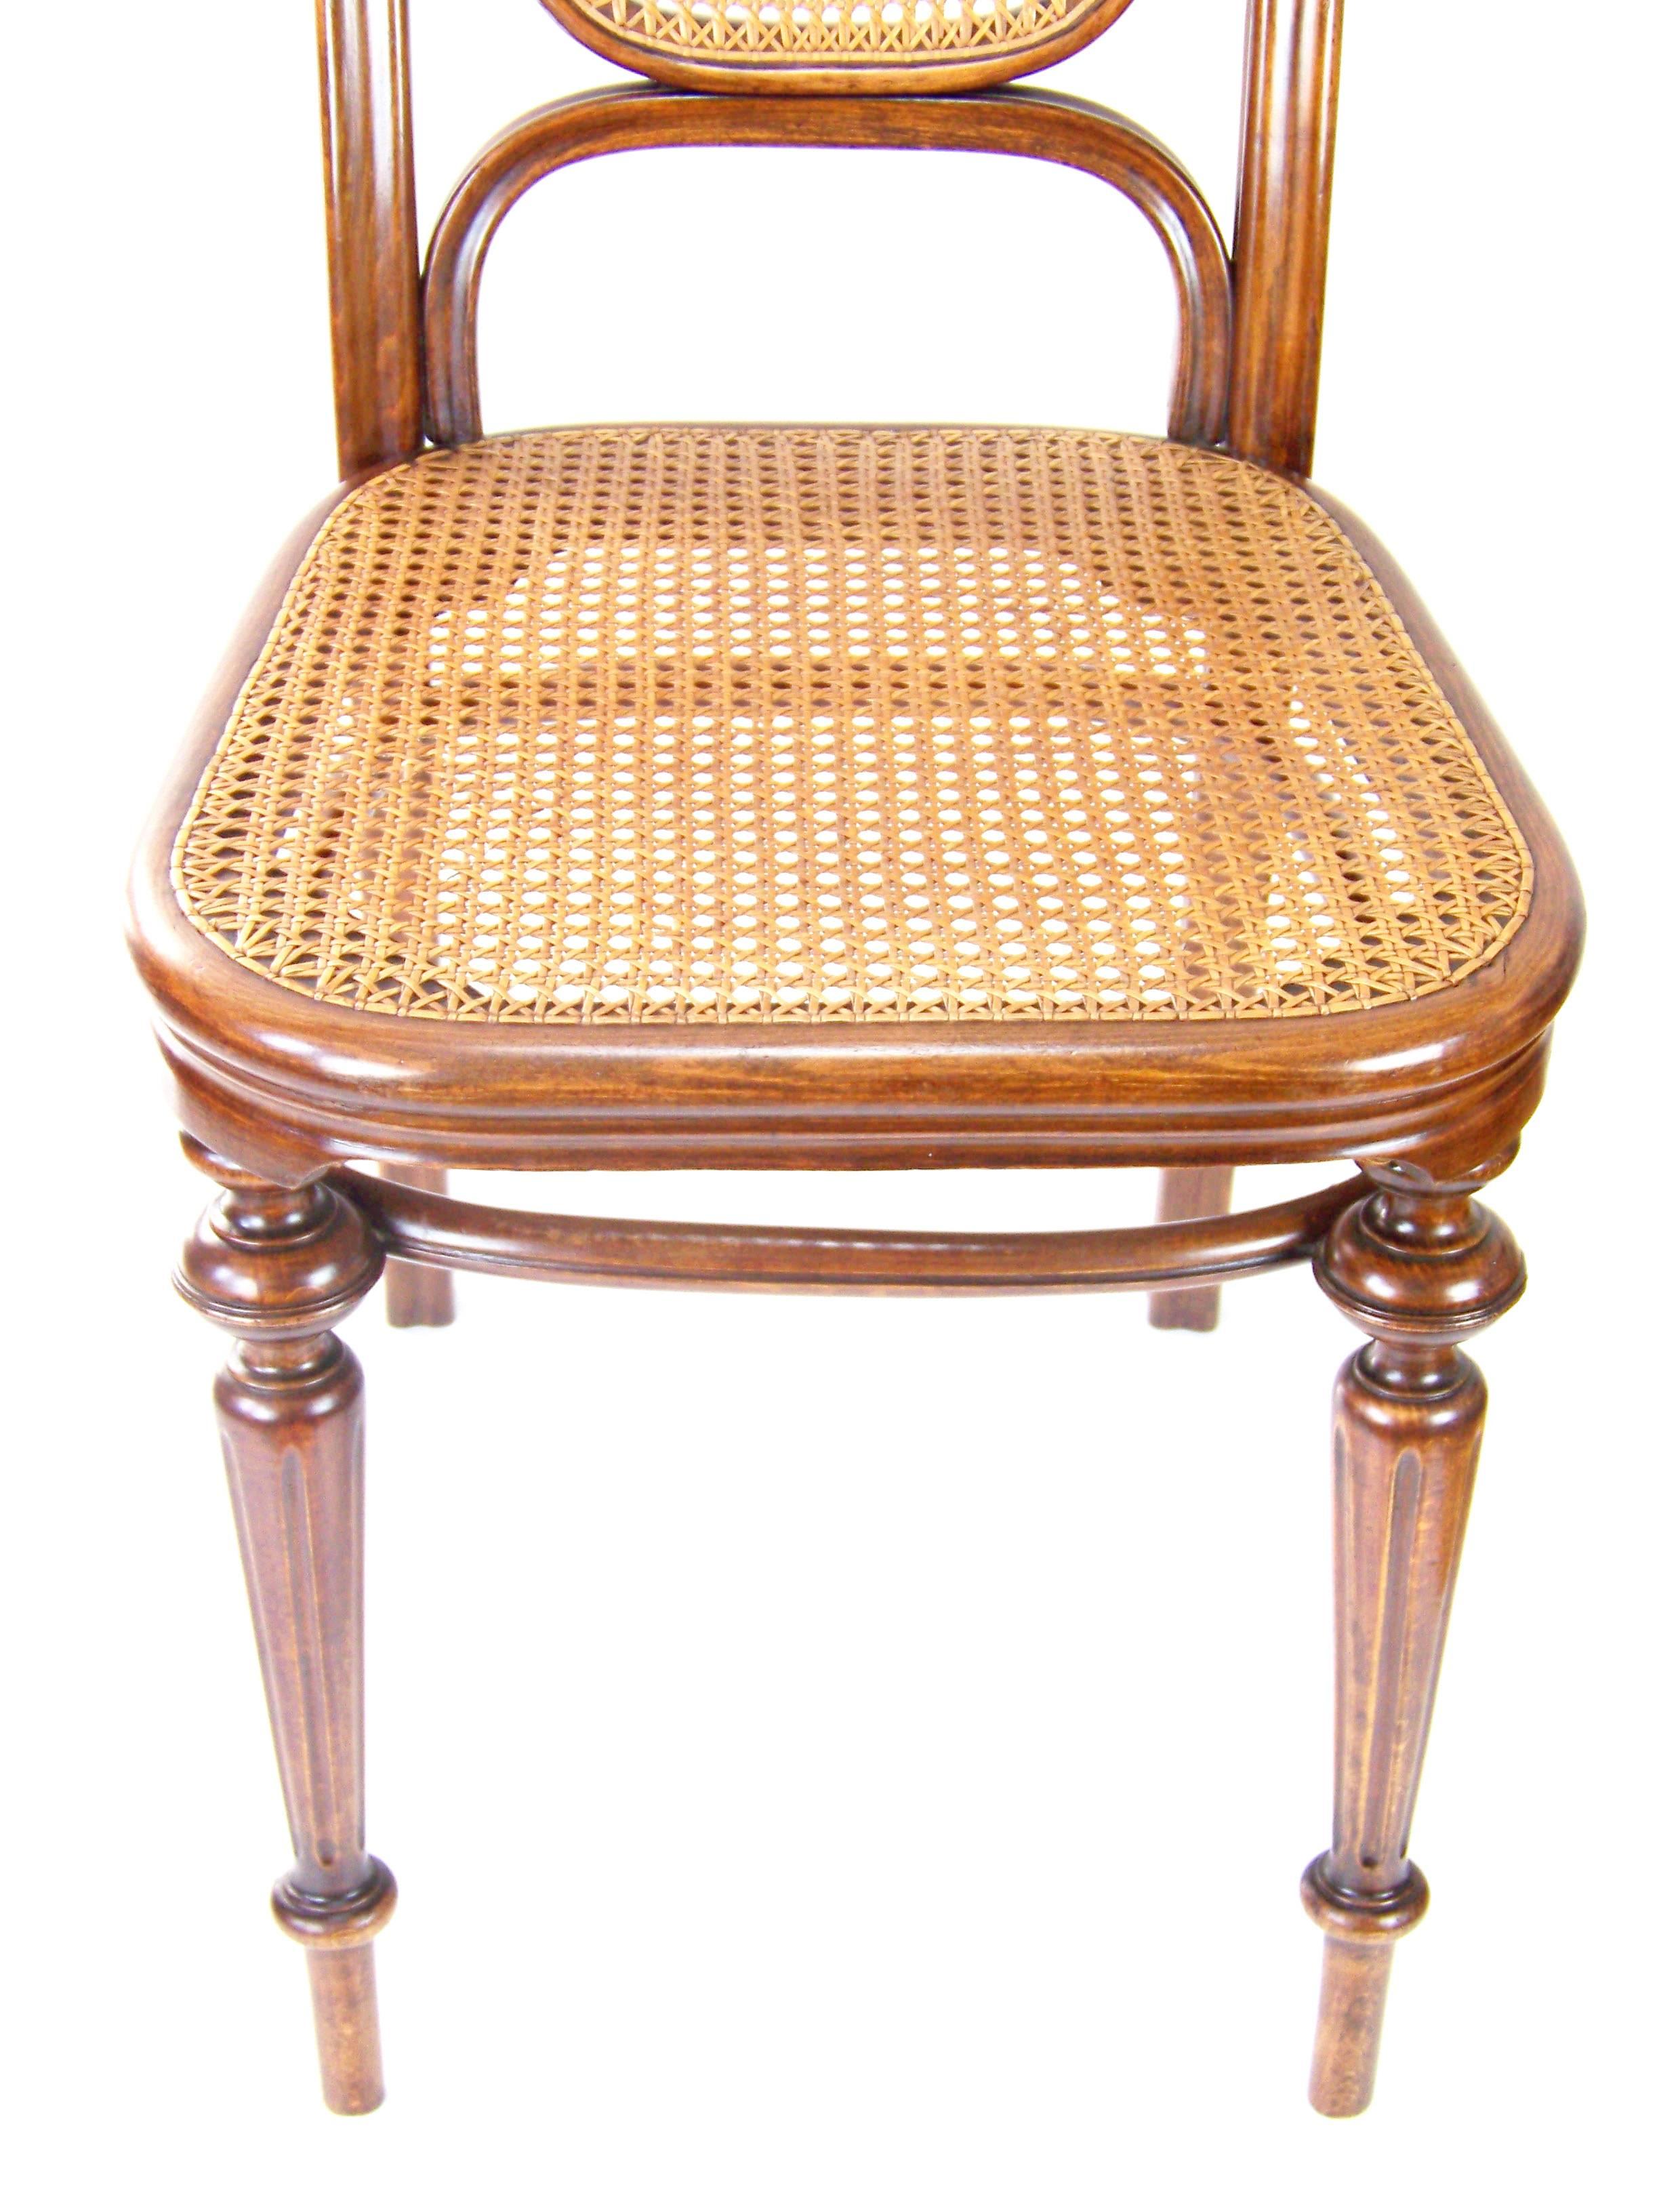 Victorian Chair Thonet Nr.32, since 1883